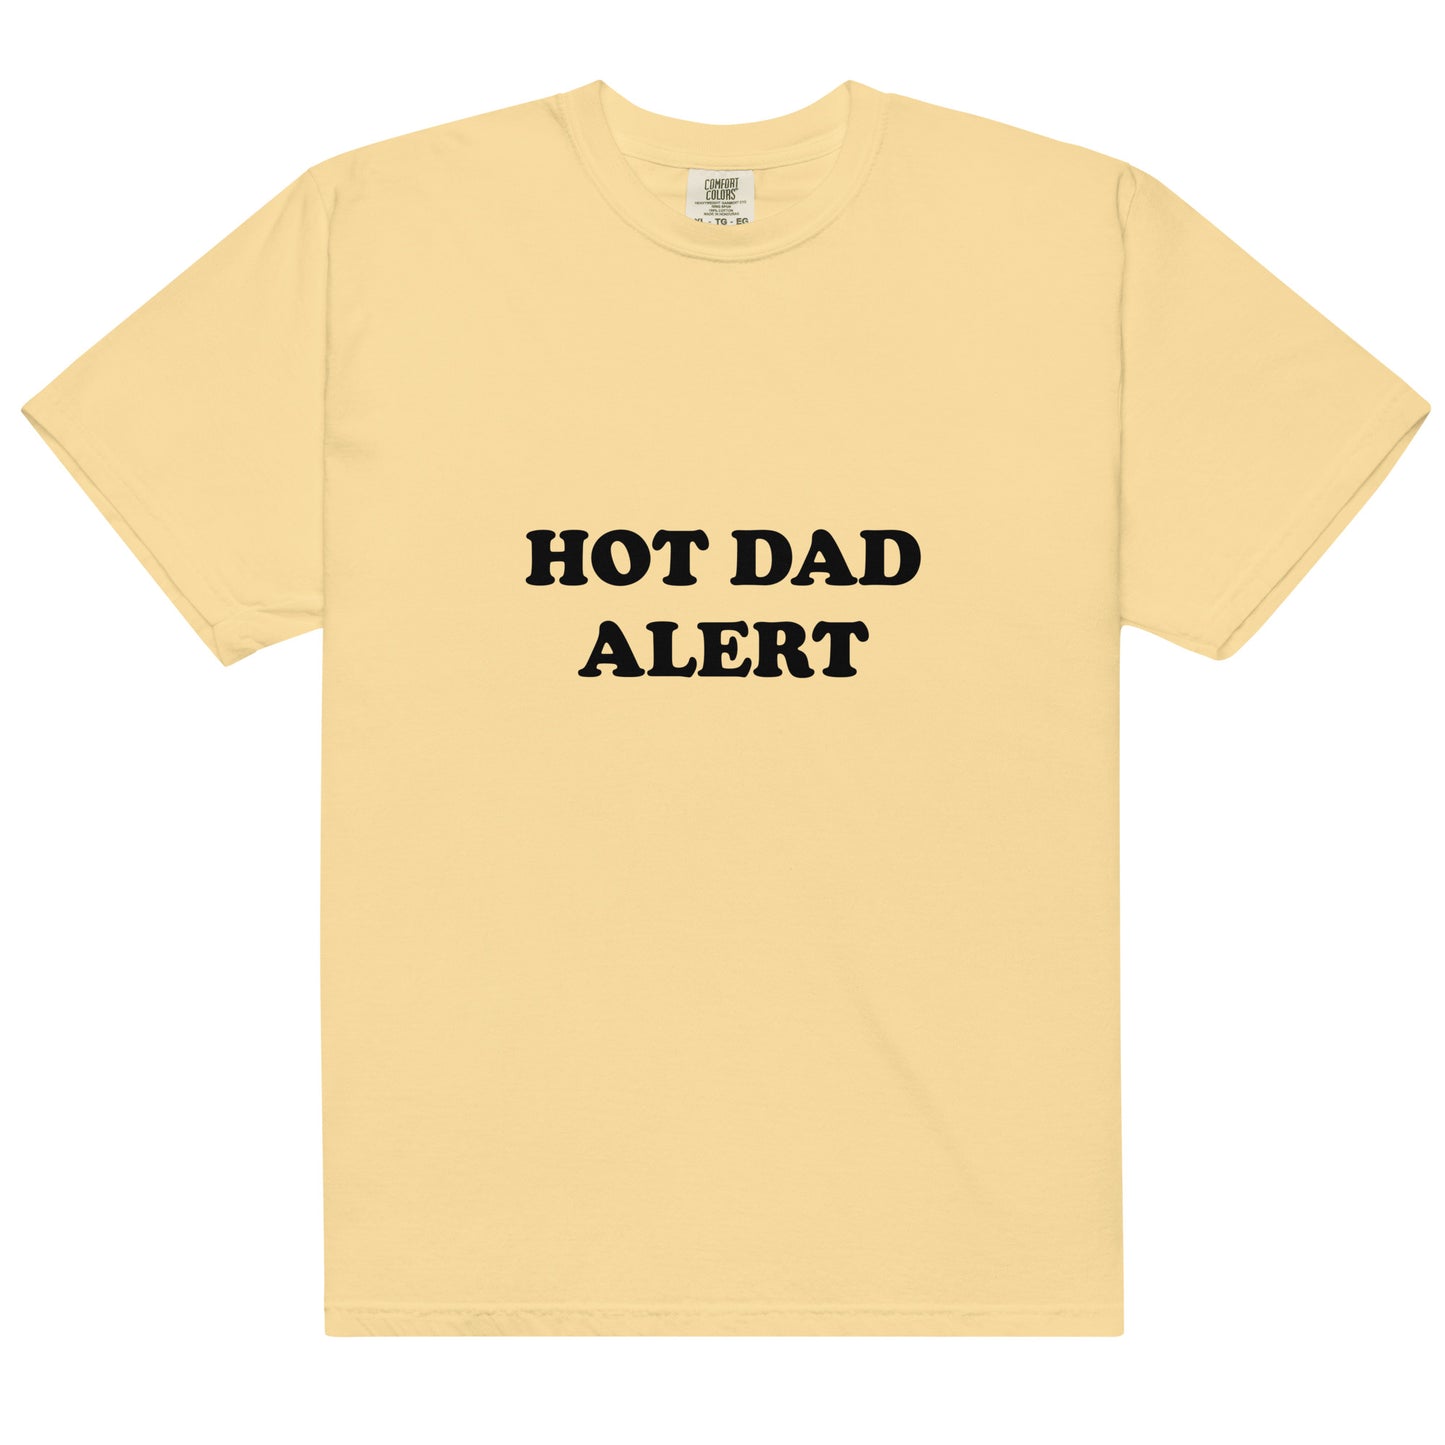 Hot Dad Alert Printed Tshirt